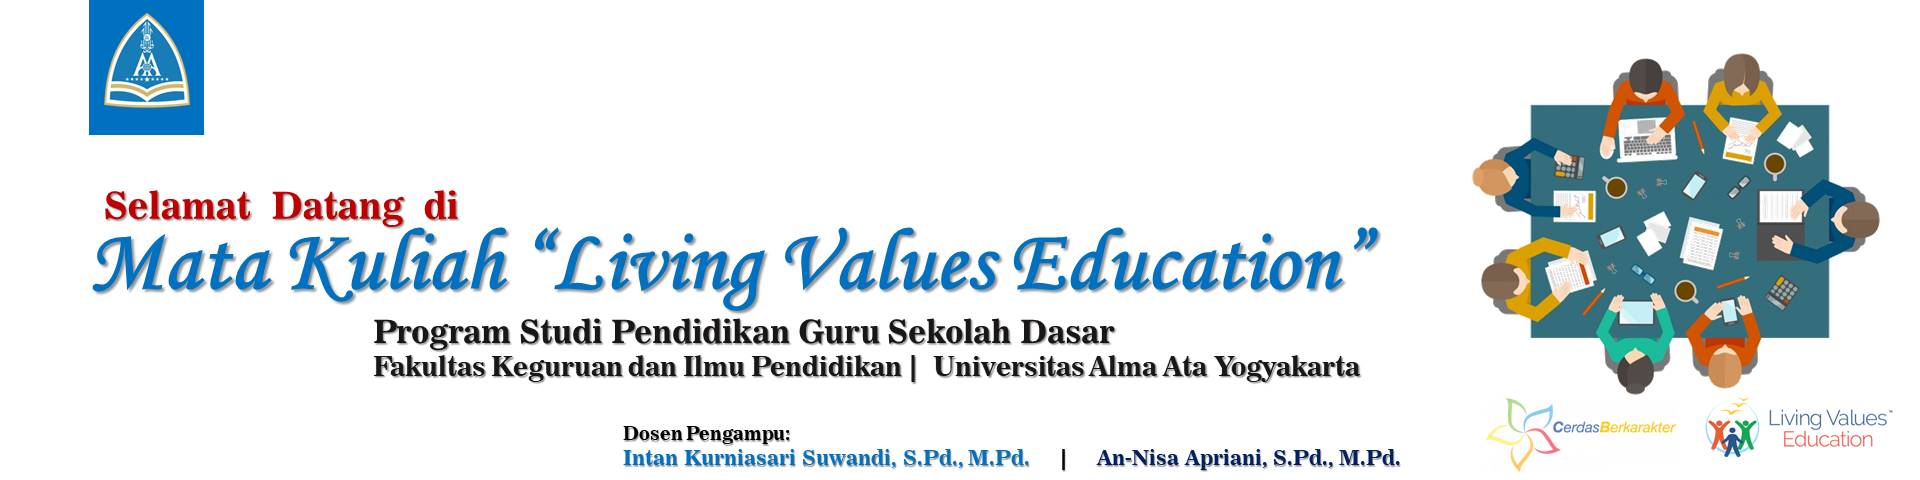 Living Values Education